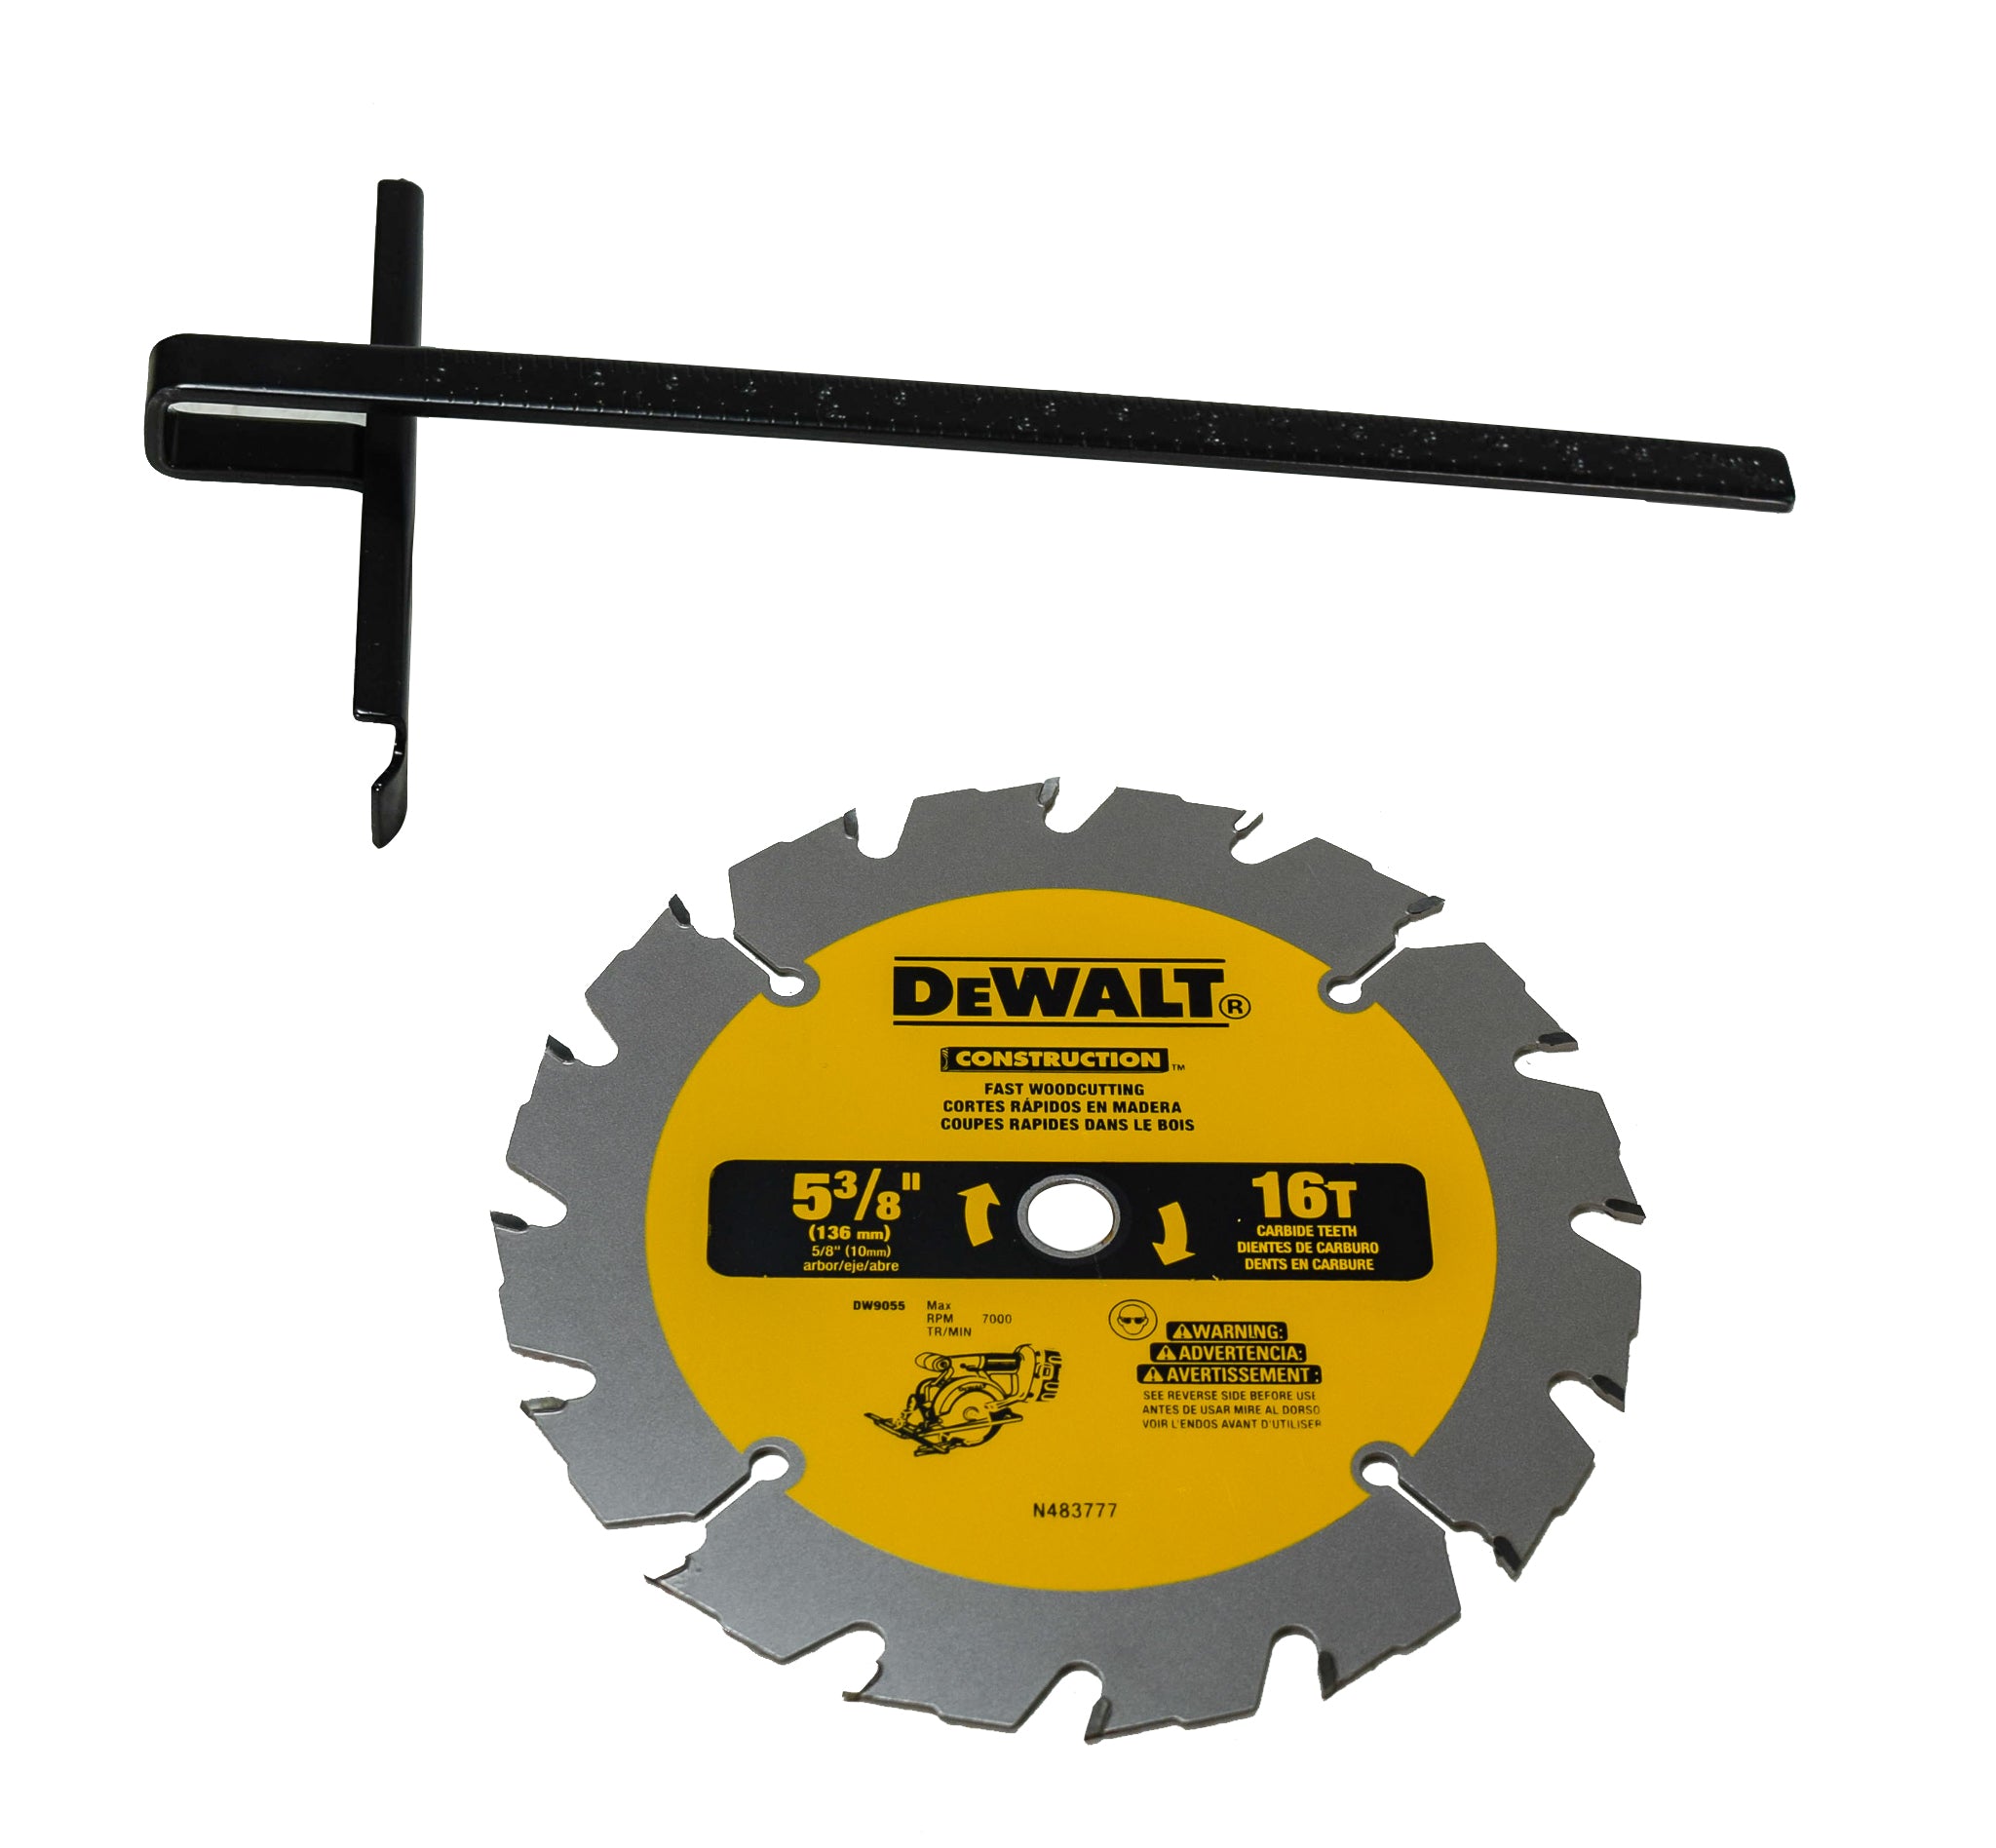 Dewalt DCS512B 12V MAX XTREME Brushless 5-3/8" Cordless Circular Saw (Bare Tool)